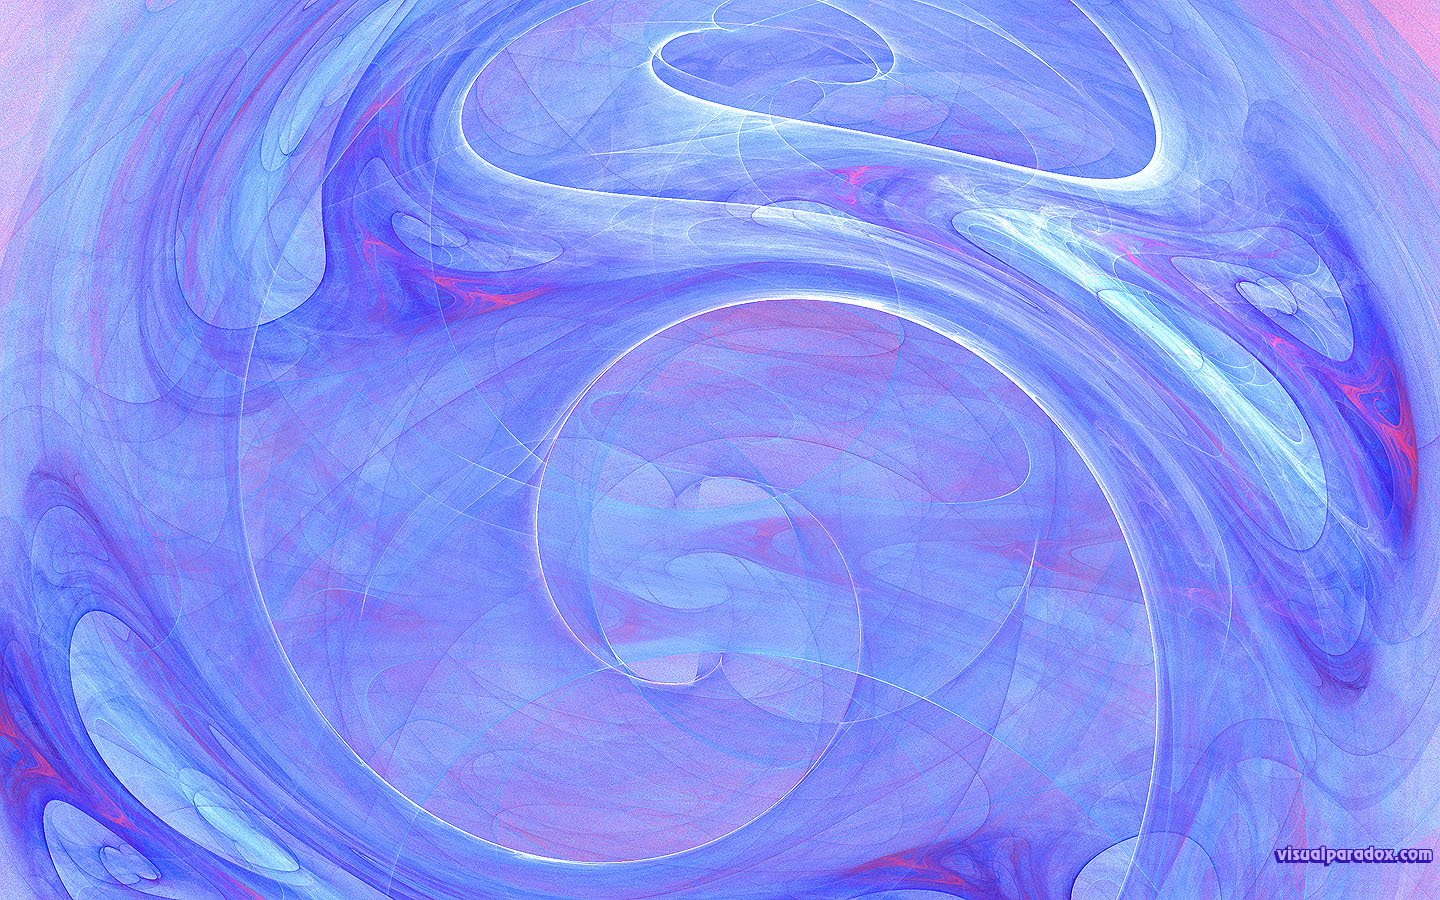 whirlpool, vortex, flame, fractal, spiral, swirl, twist, rotate, rainbow, design, radial, abstract, 3d, wallpaper, widescreen